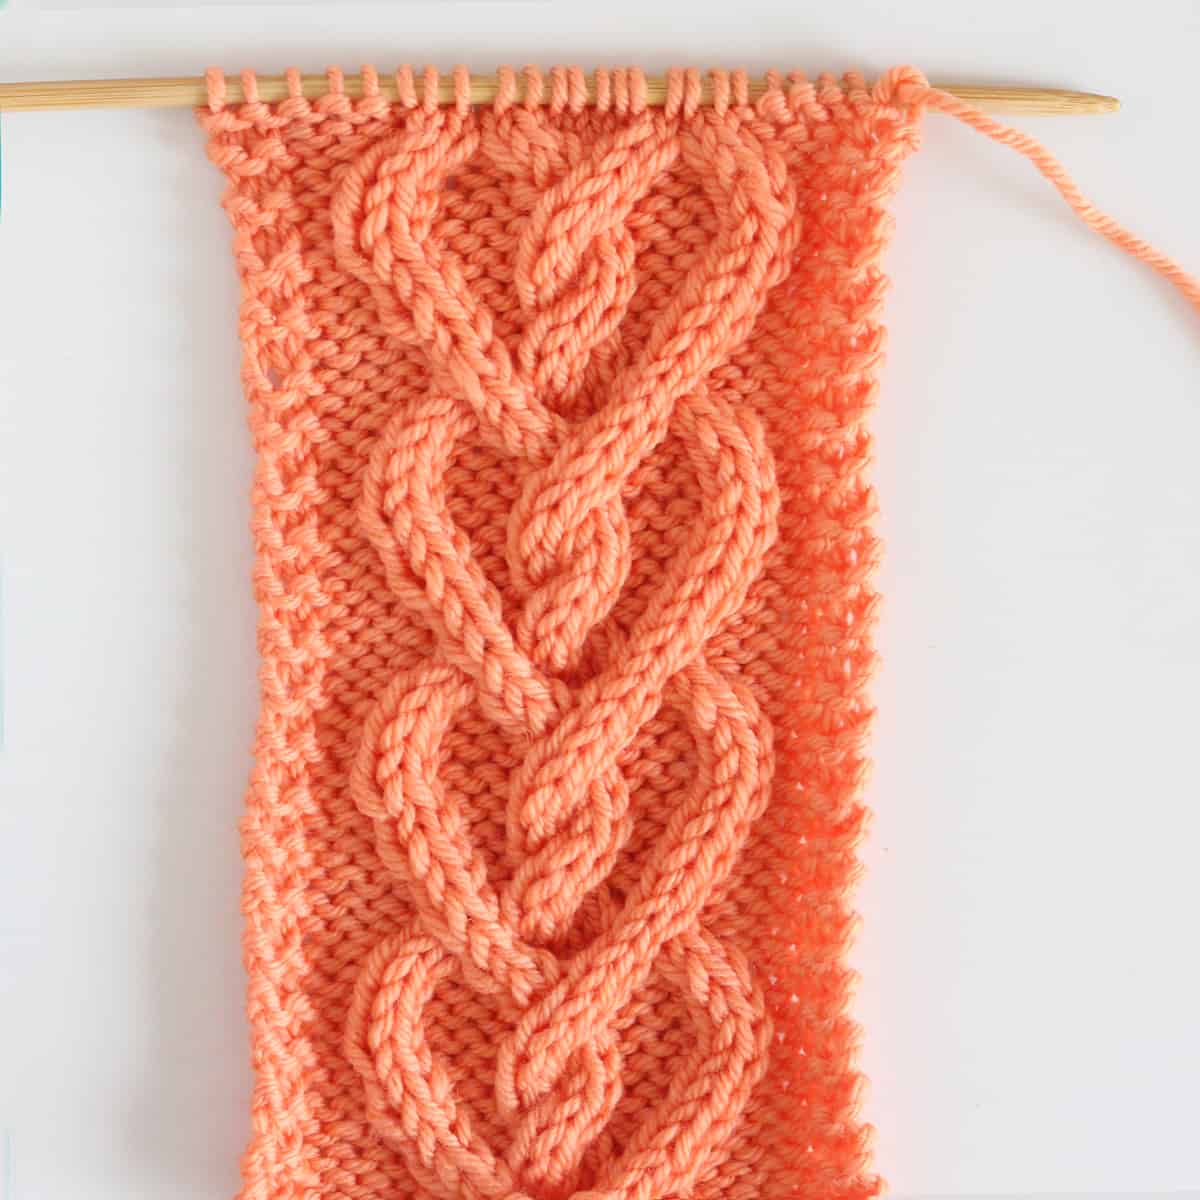 Cable Heart Stitch pattern on knitting needle.